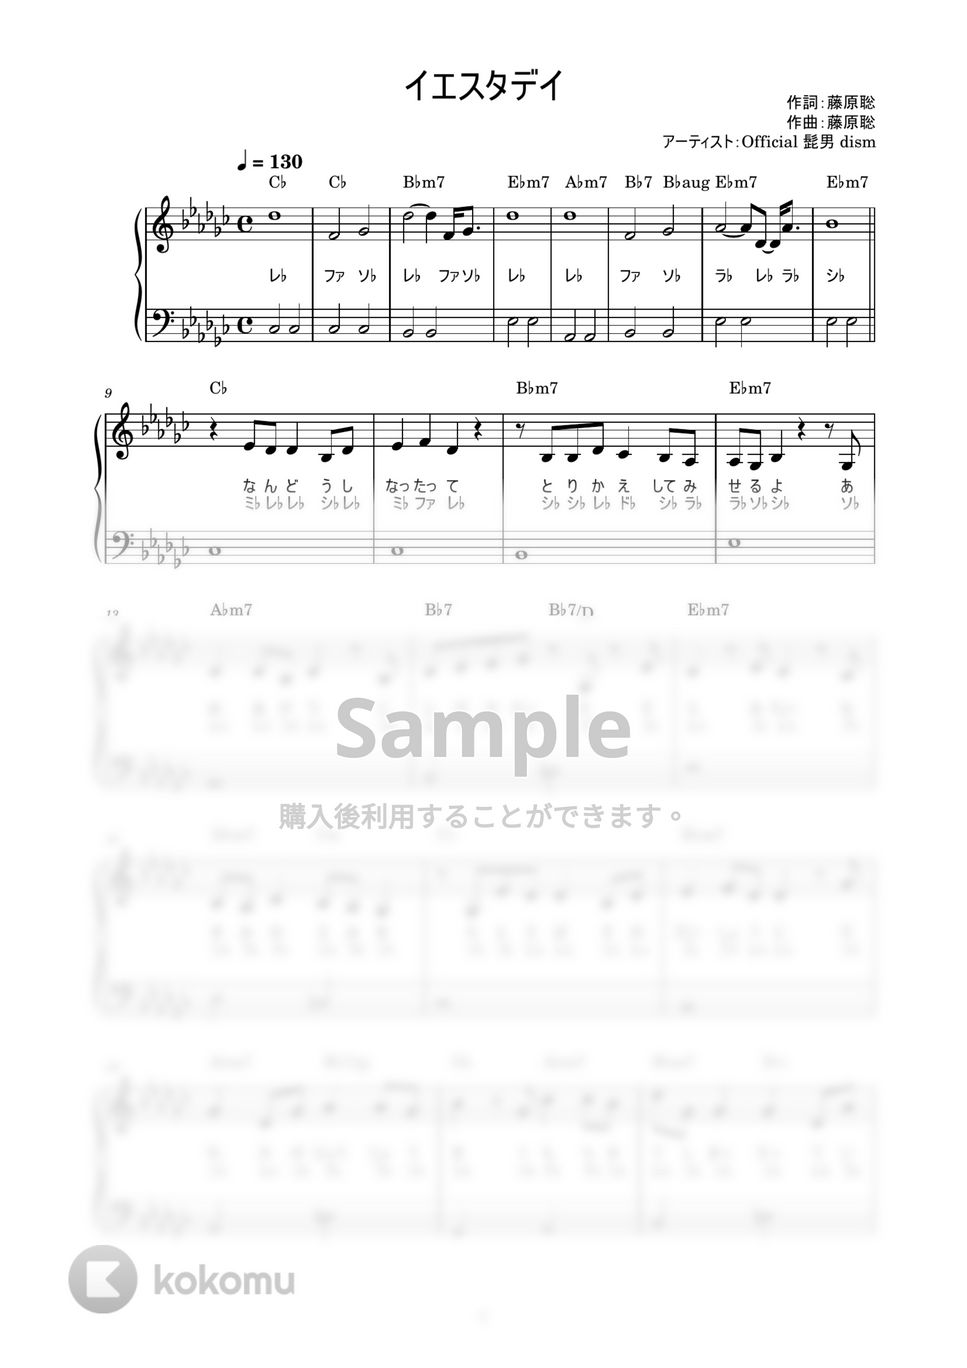 Official髭男dism - イエスタデイ (かんたん / 歌詞付き / ドレミ付き / 初心者) by piano.tokyo